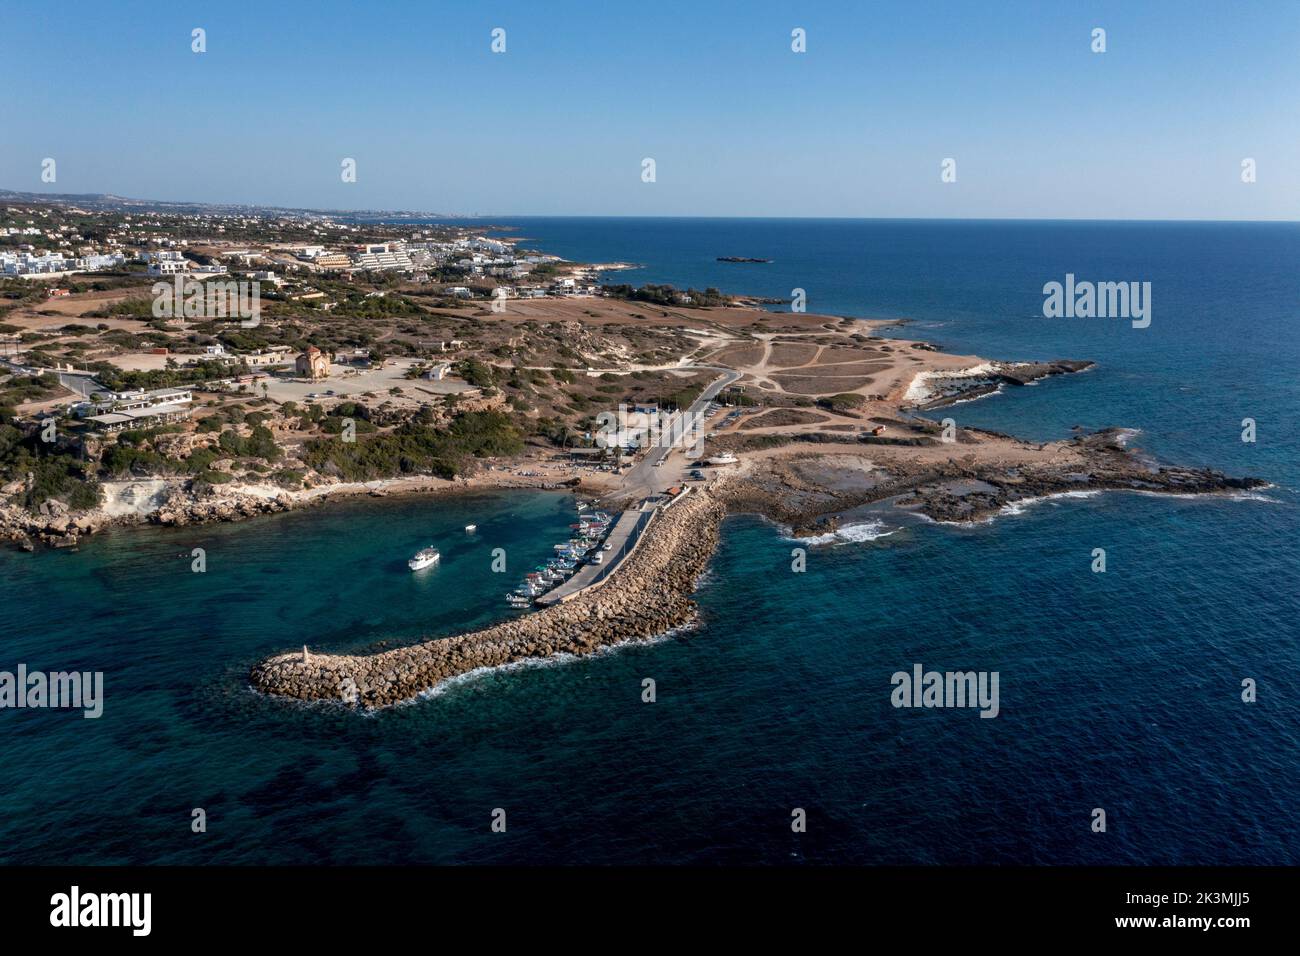 Aerial view of Agios Georgios (St Georges) harbour, Akamas, Paphos region, Cyprus. Stock Photo